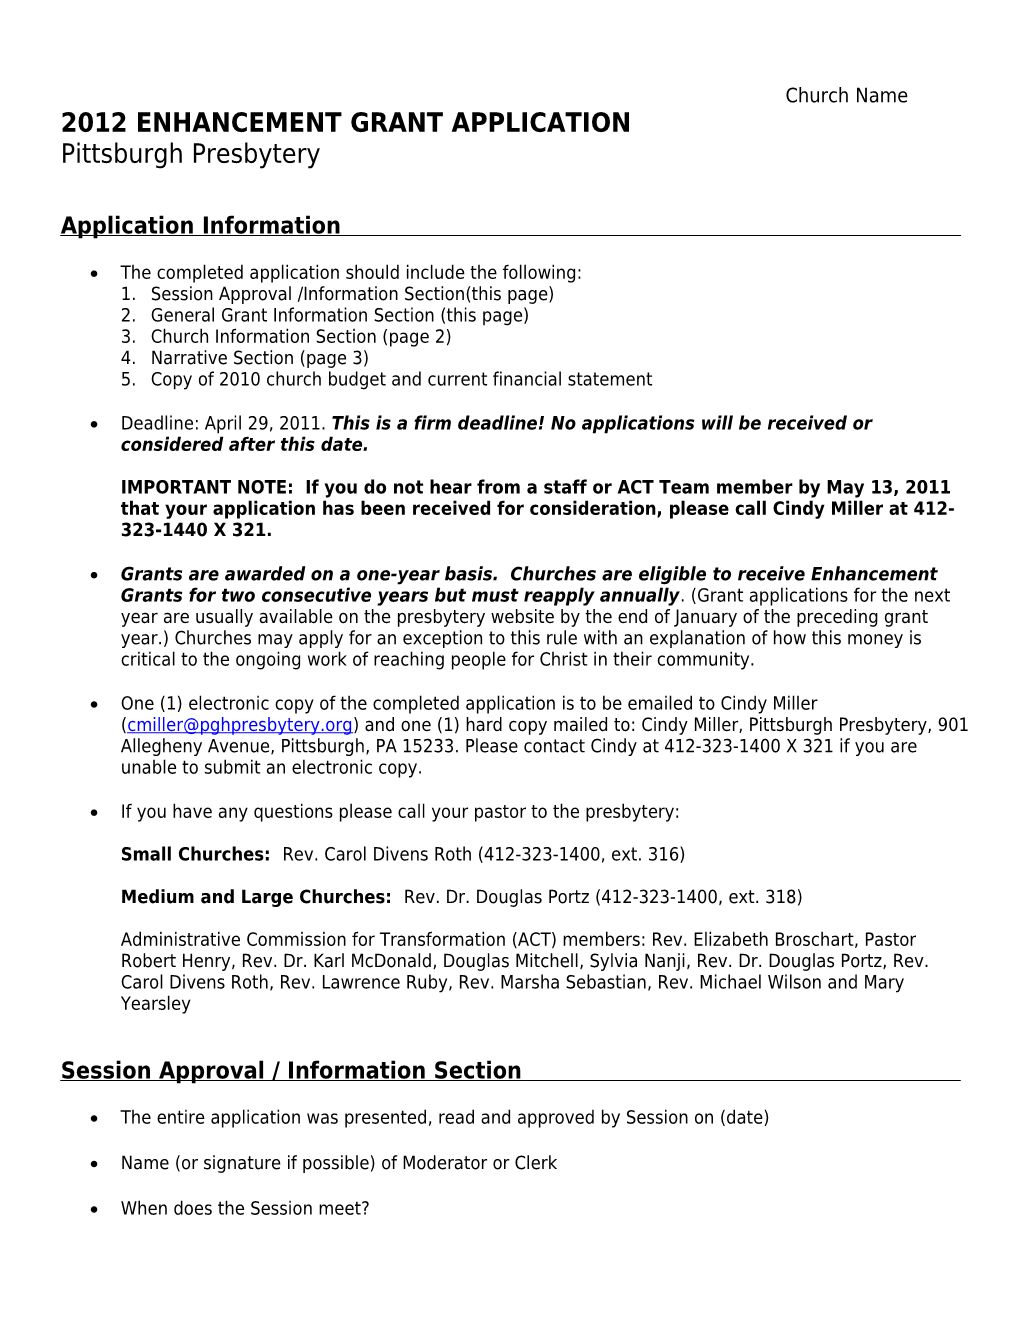 2012Enhancement Grant Application